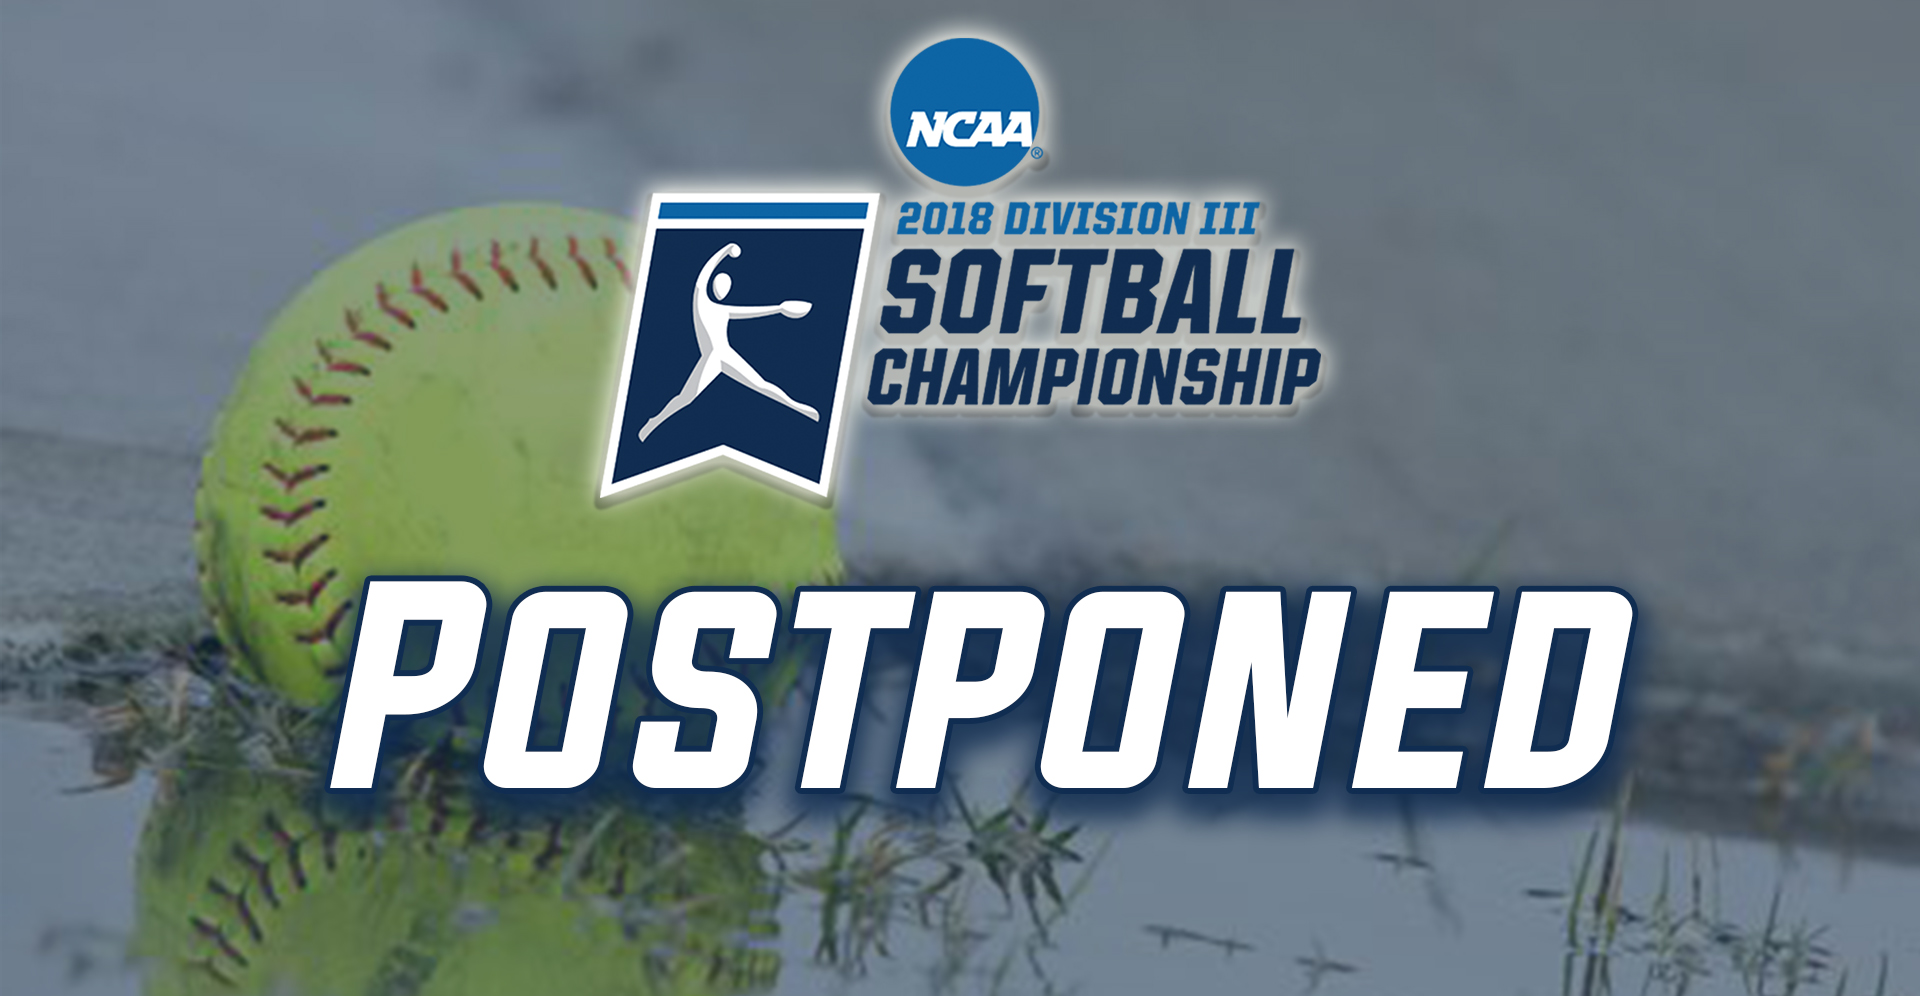 NCAA DIII Softball Super Regional at Rowan University postponed due to weather on May 18.